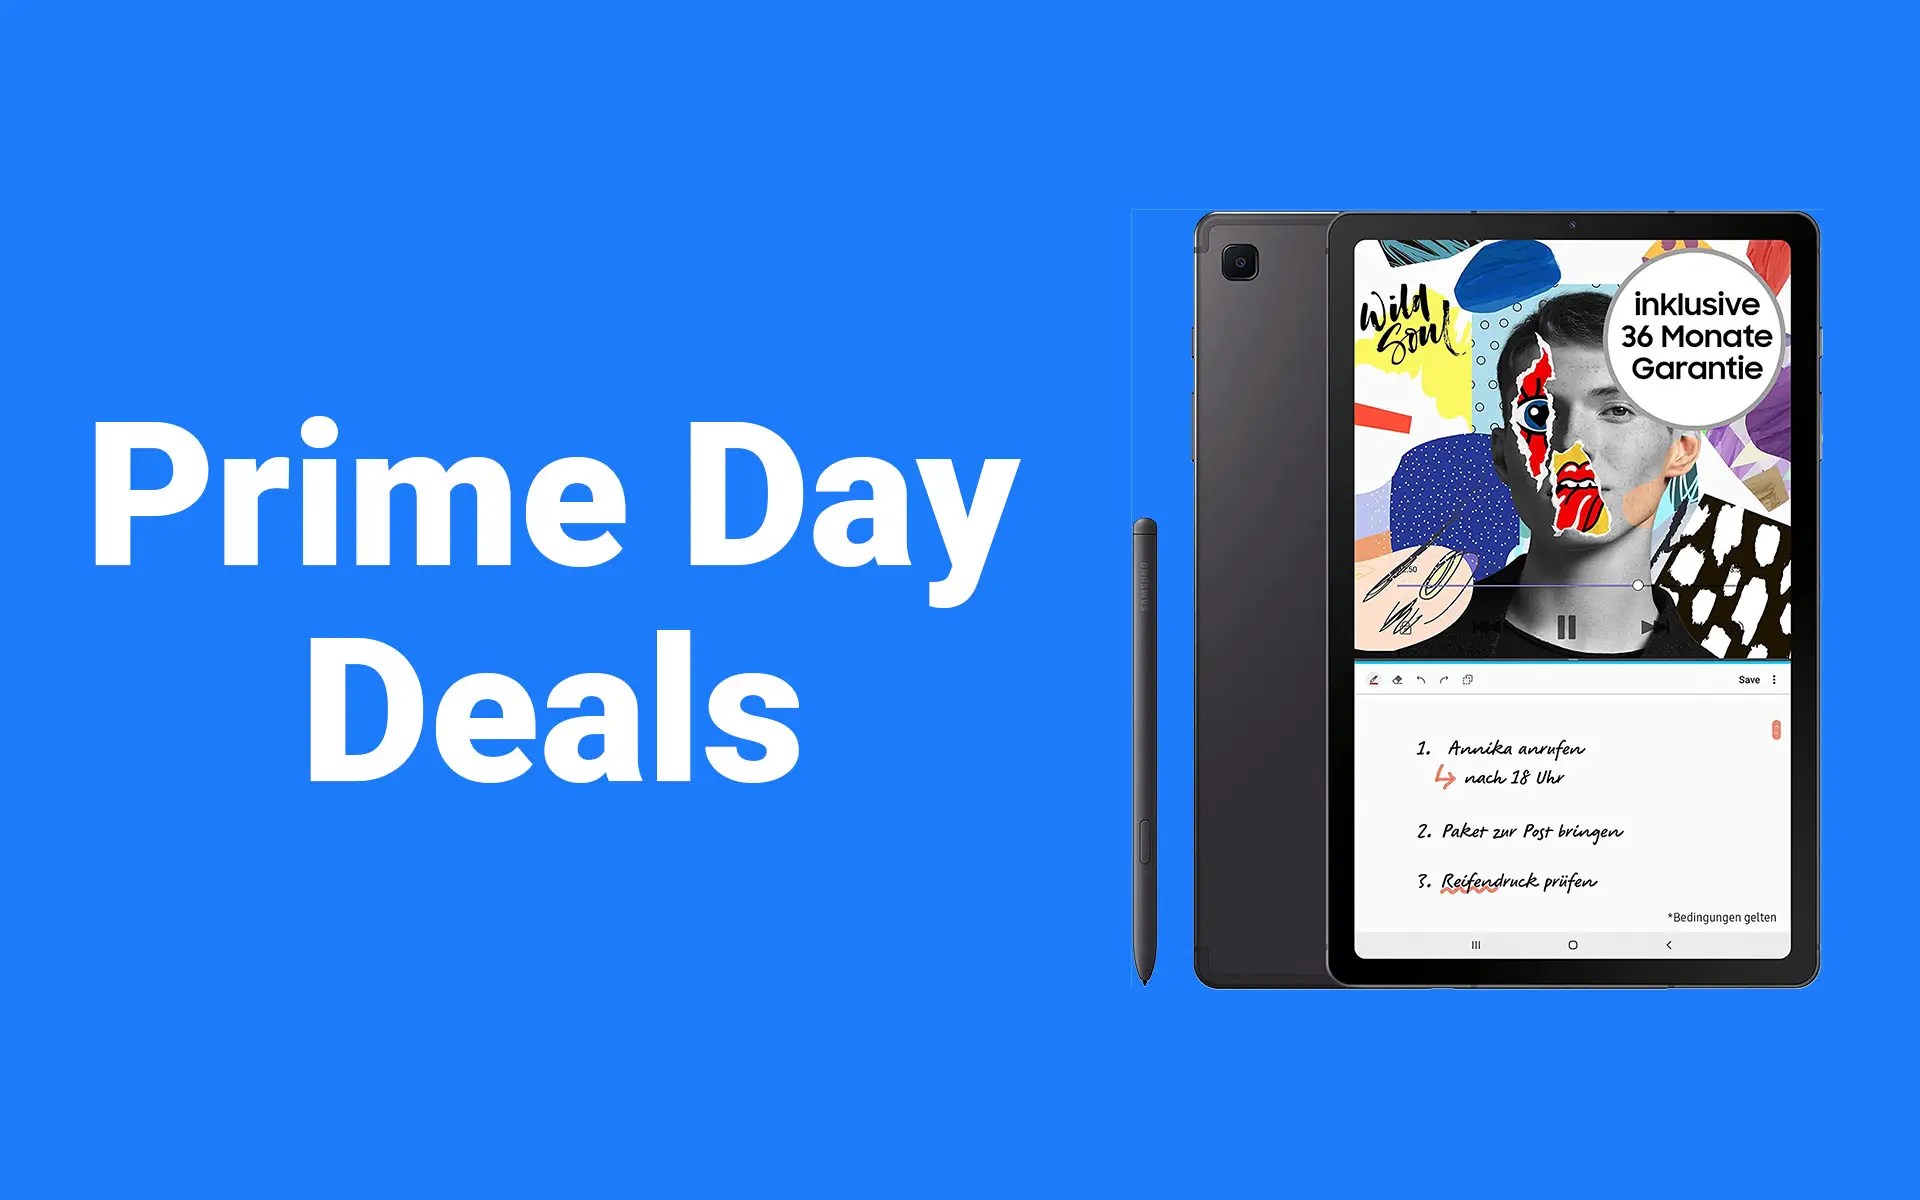 Prime Day Deals tablets